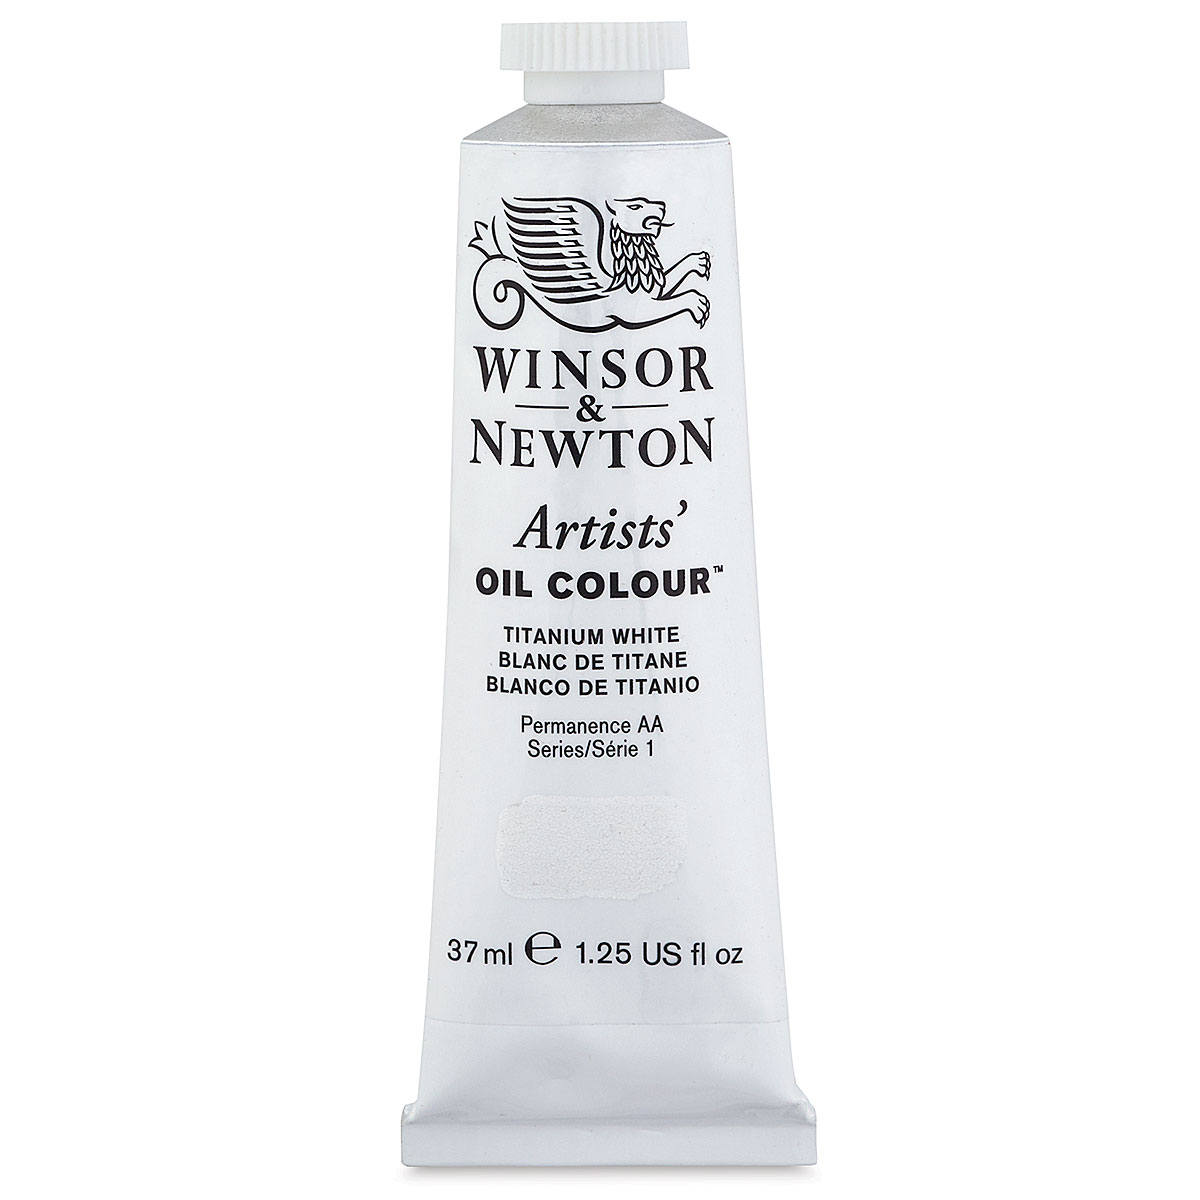 Winsor & Newton Designer's Gouache, 37 ml (1.25oz) tube, Zinc White